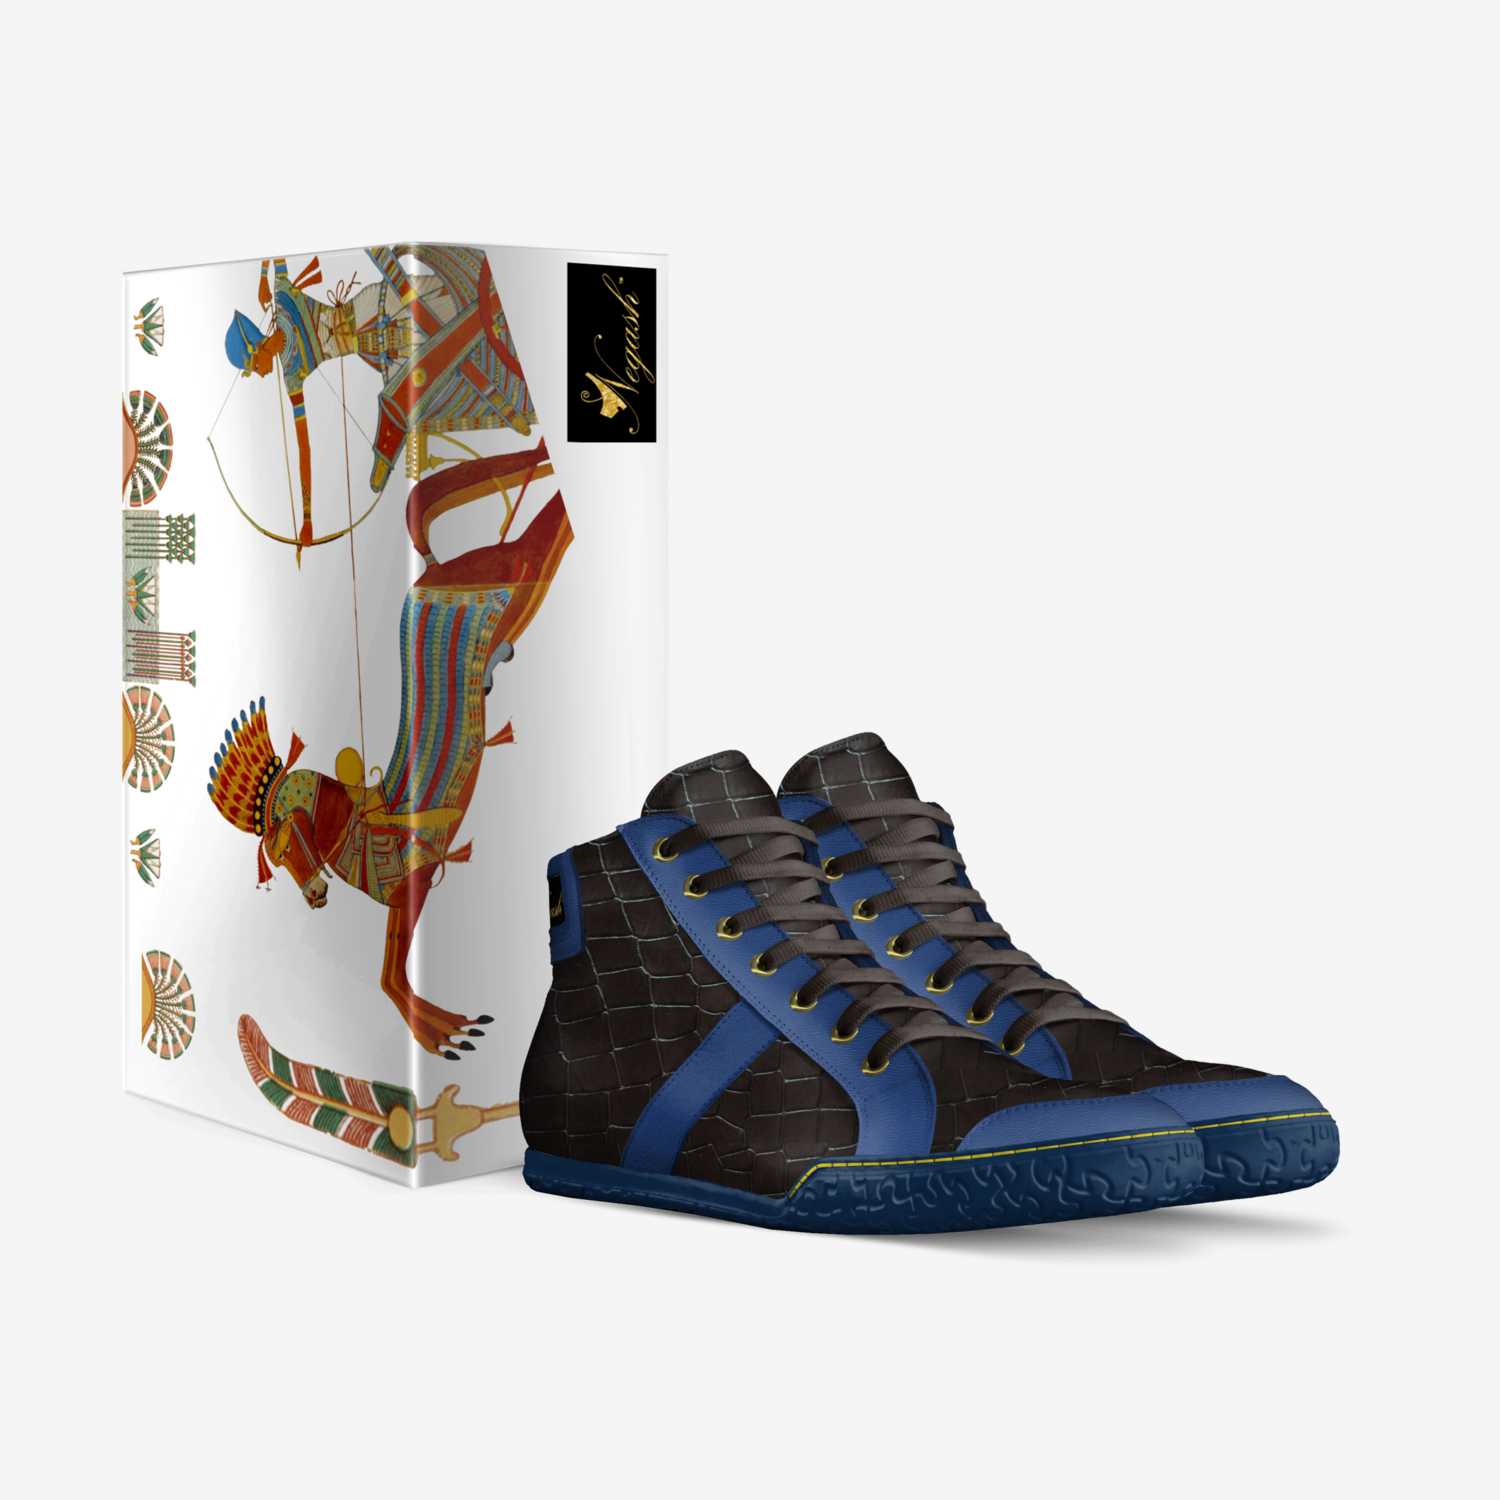 Negash Sobek Blu custom made in Italy shoes by Rocklin Negash | Box view